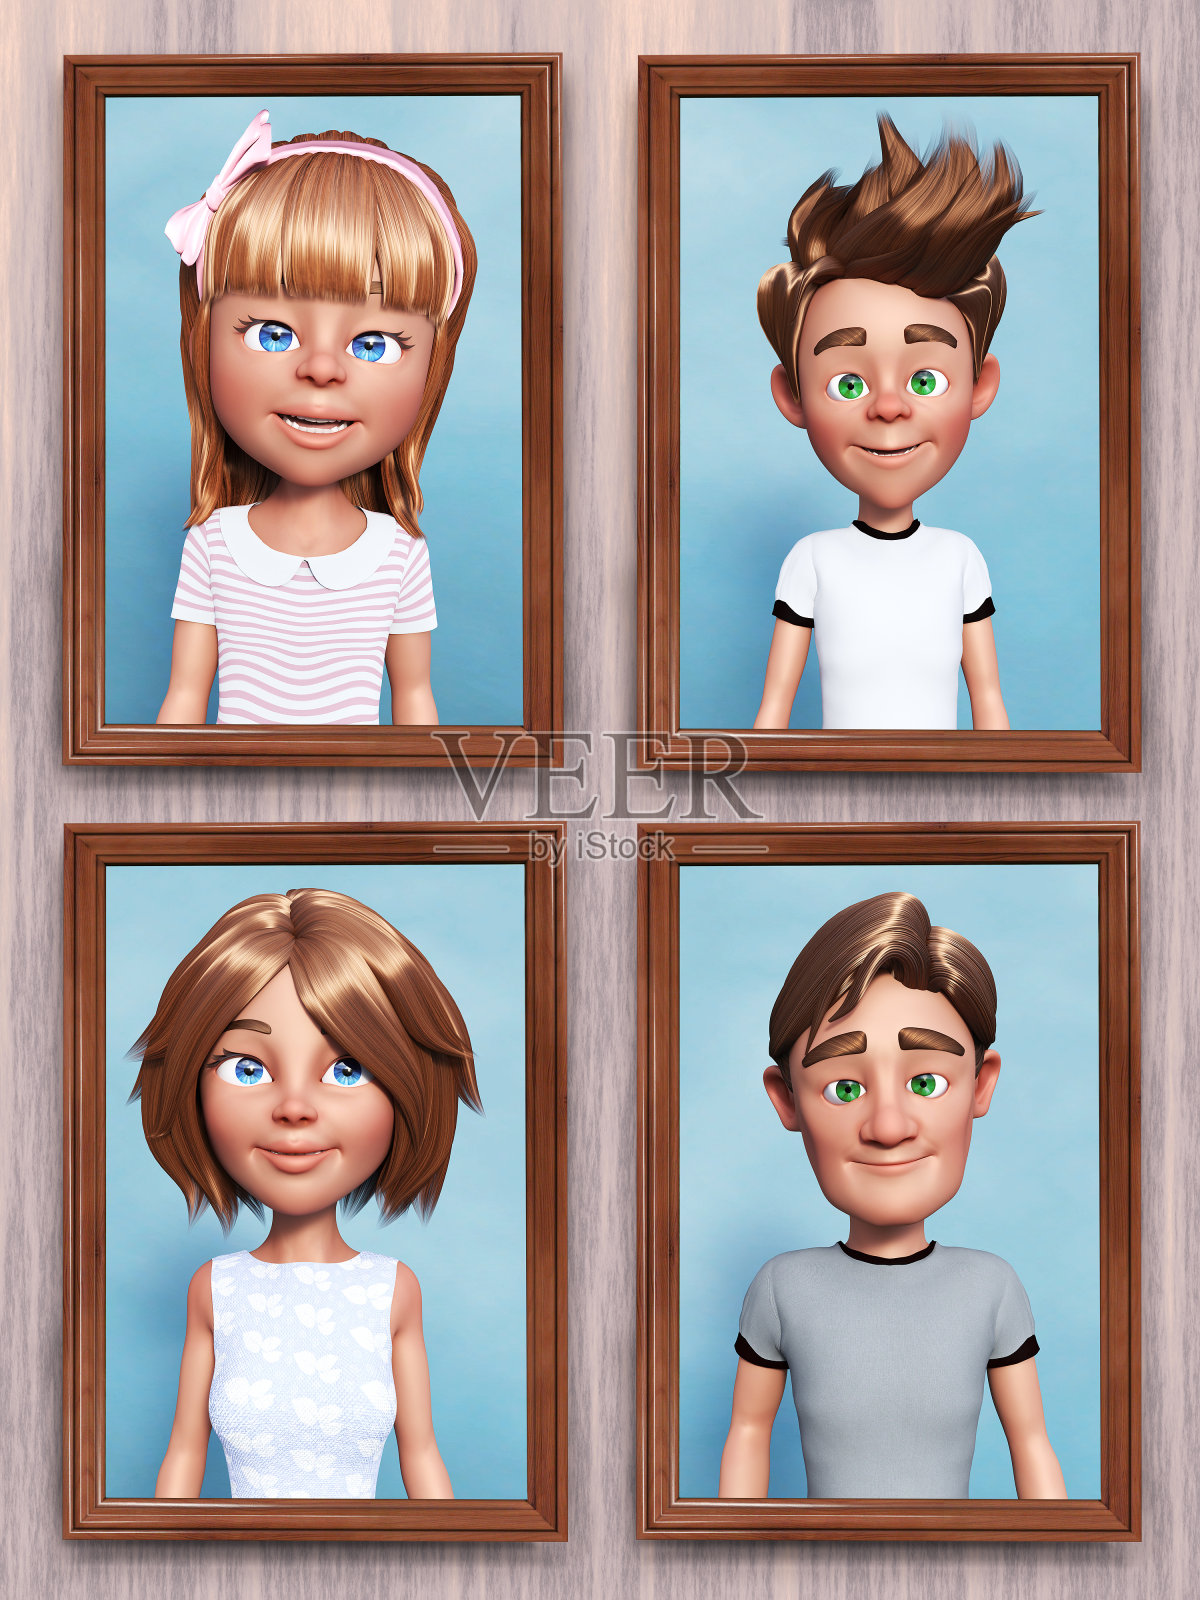 3D渲染的四个卡通家庭画像在墙上。照片摄影图片